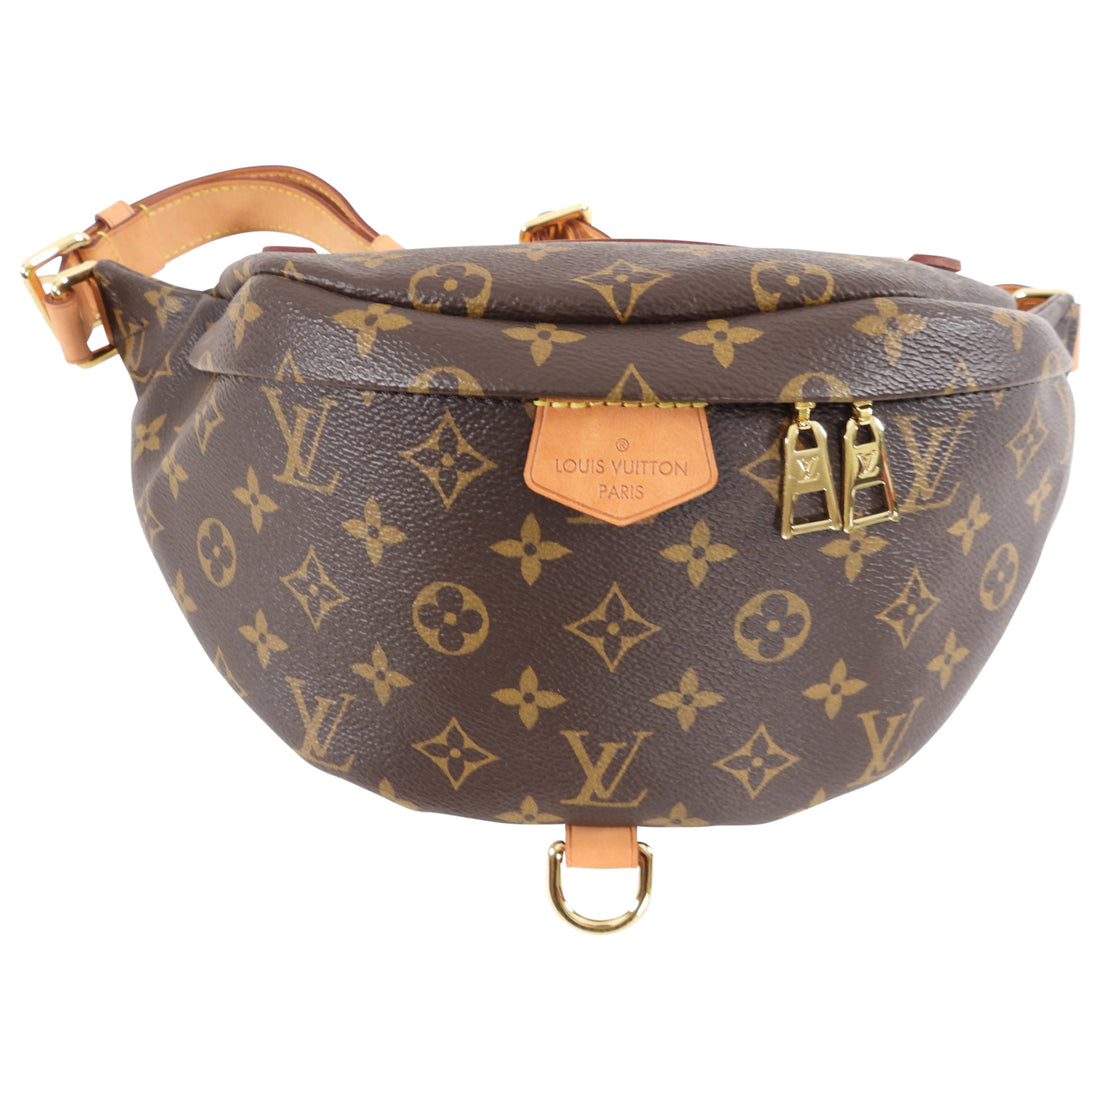 Louis Vuitton lv monogram belt bag funny pack oxidized leather